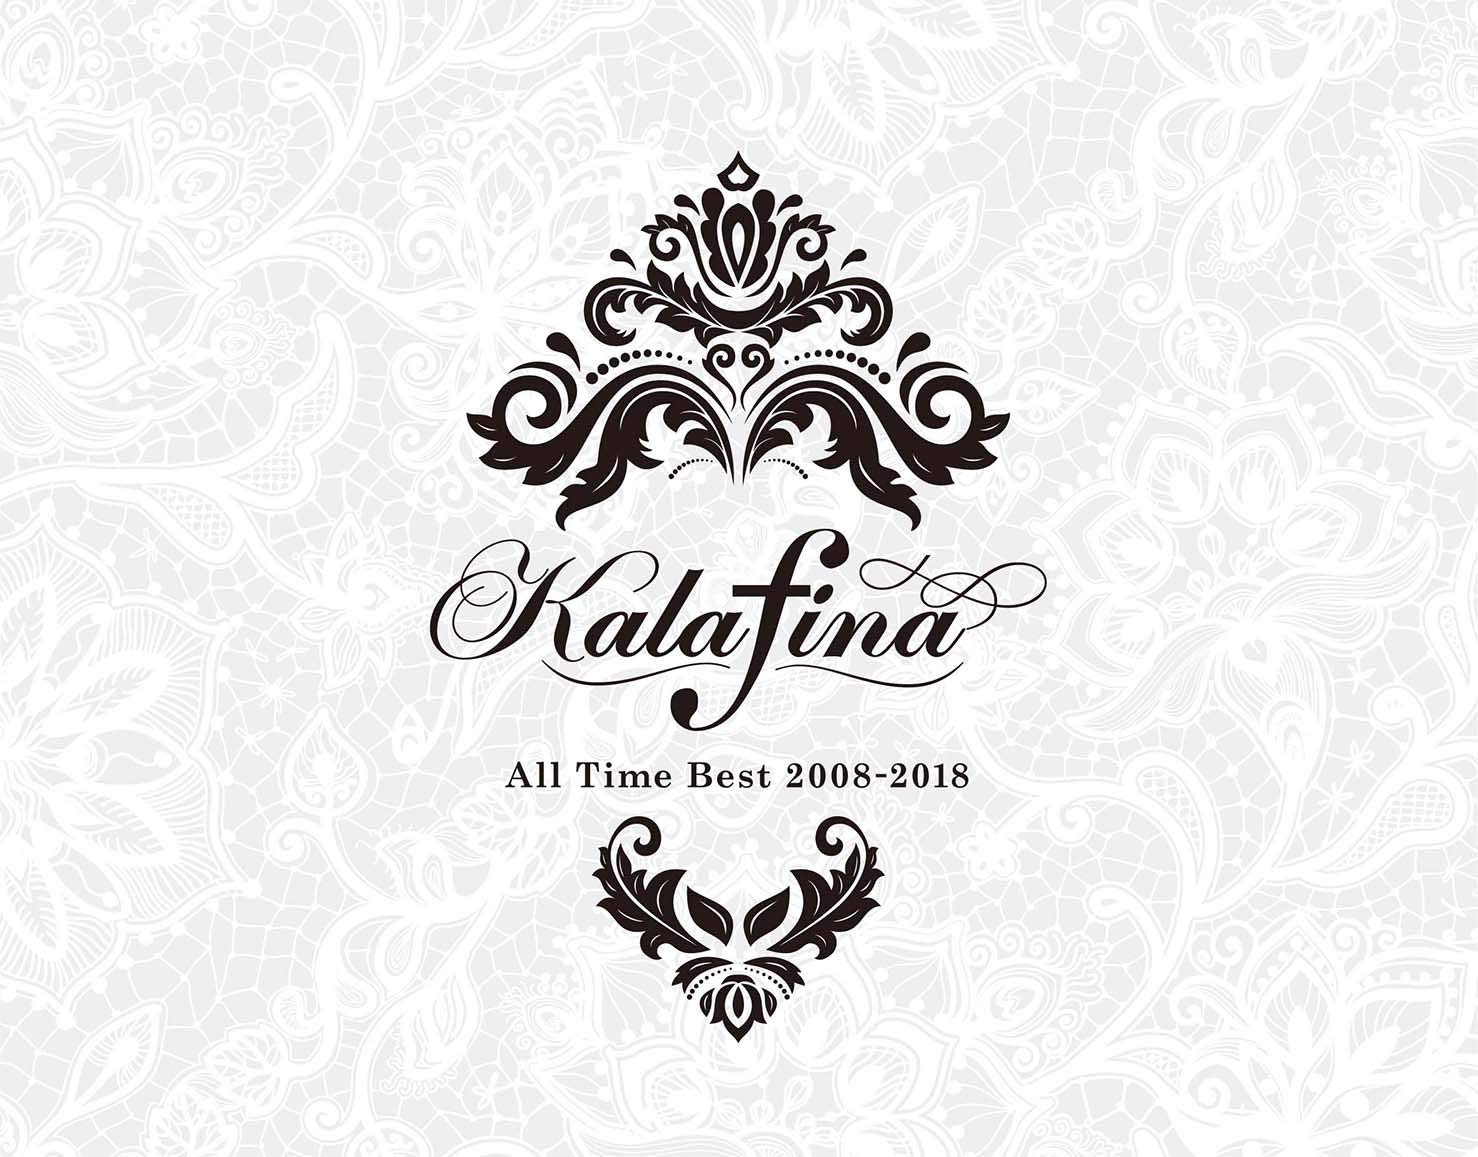 Kalafina - Kalafina All Time Best 2008-2018 [Mora FLAC 24bit/96kHz]